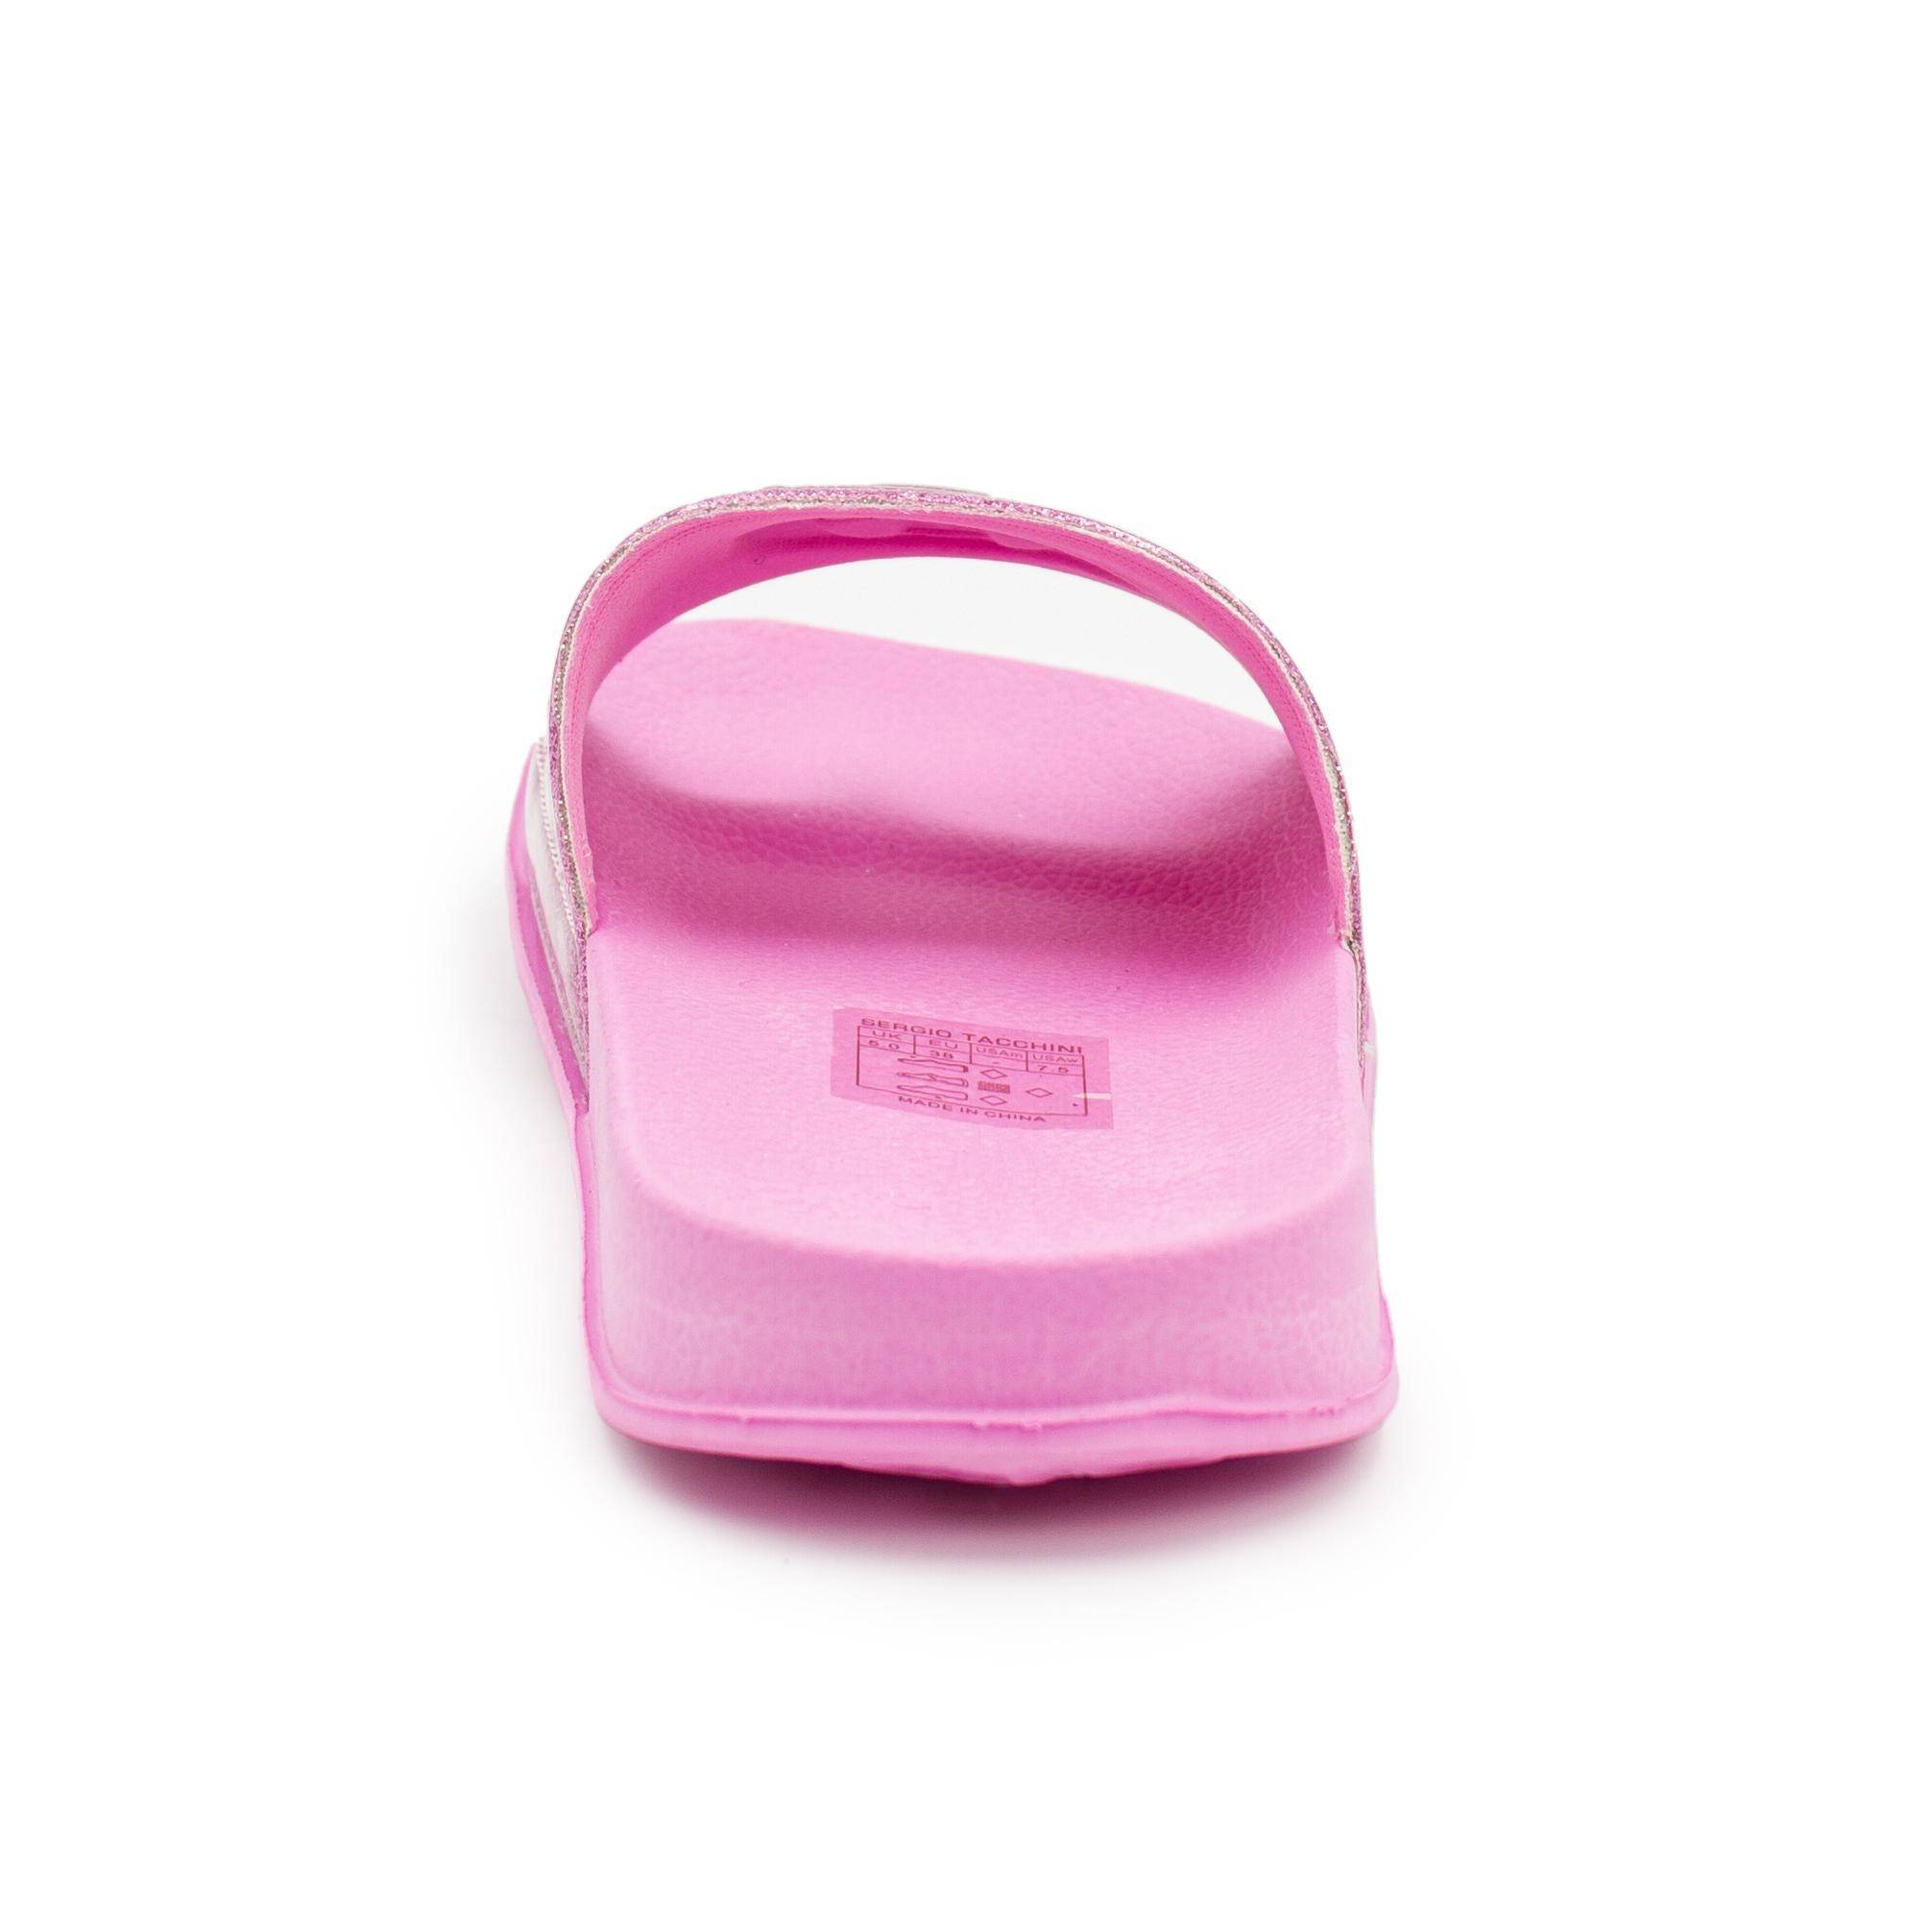 Женские сланцы Sergio Tacchini (REMIX GLITTER STW219006), розовые, цвет розовый, размер 39 - фото 4